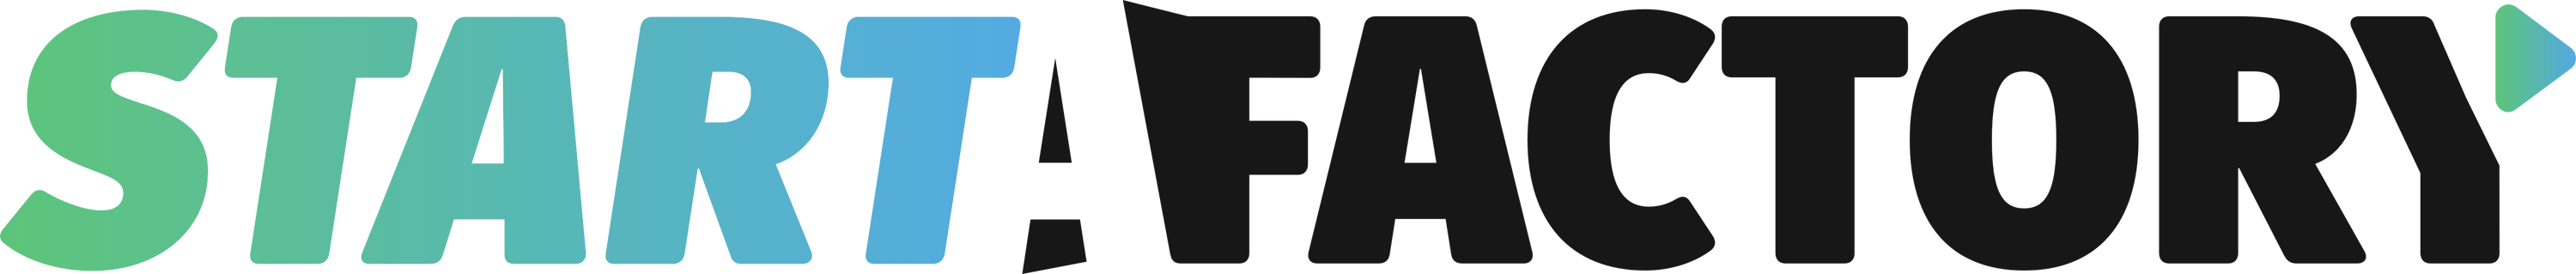 Start factory Logo